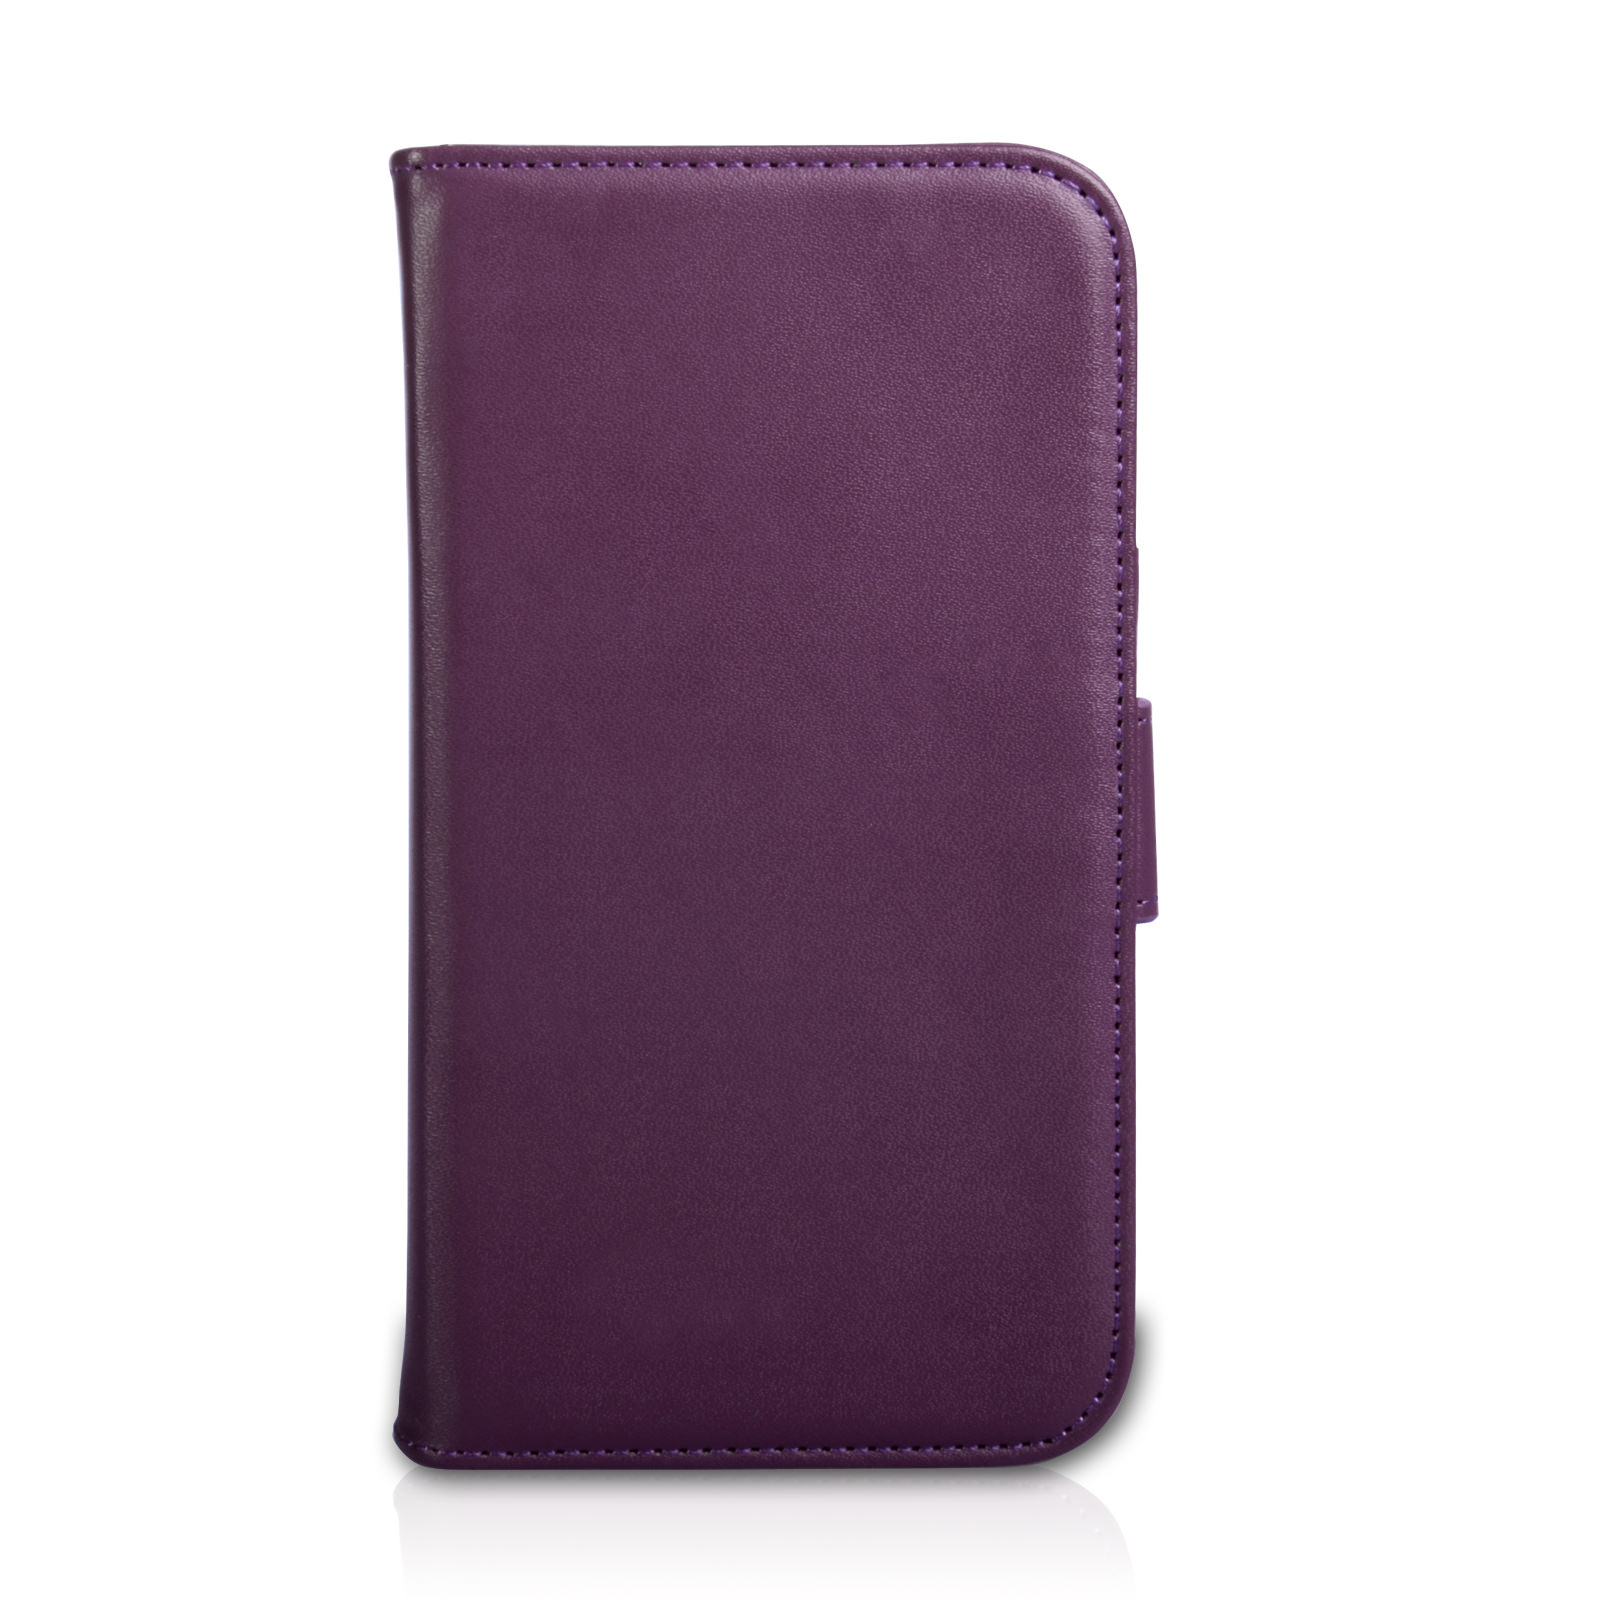 YouSave Accessories HTC Desire 610 Leather-Effect Wallet Case - Purple